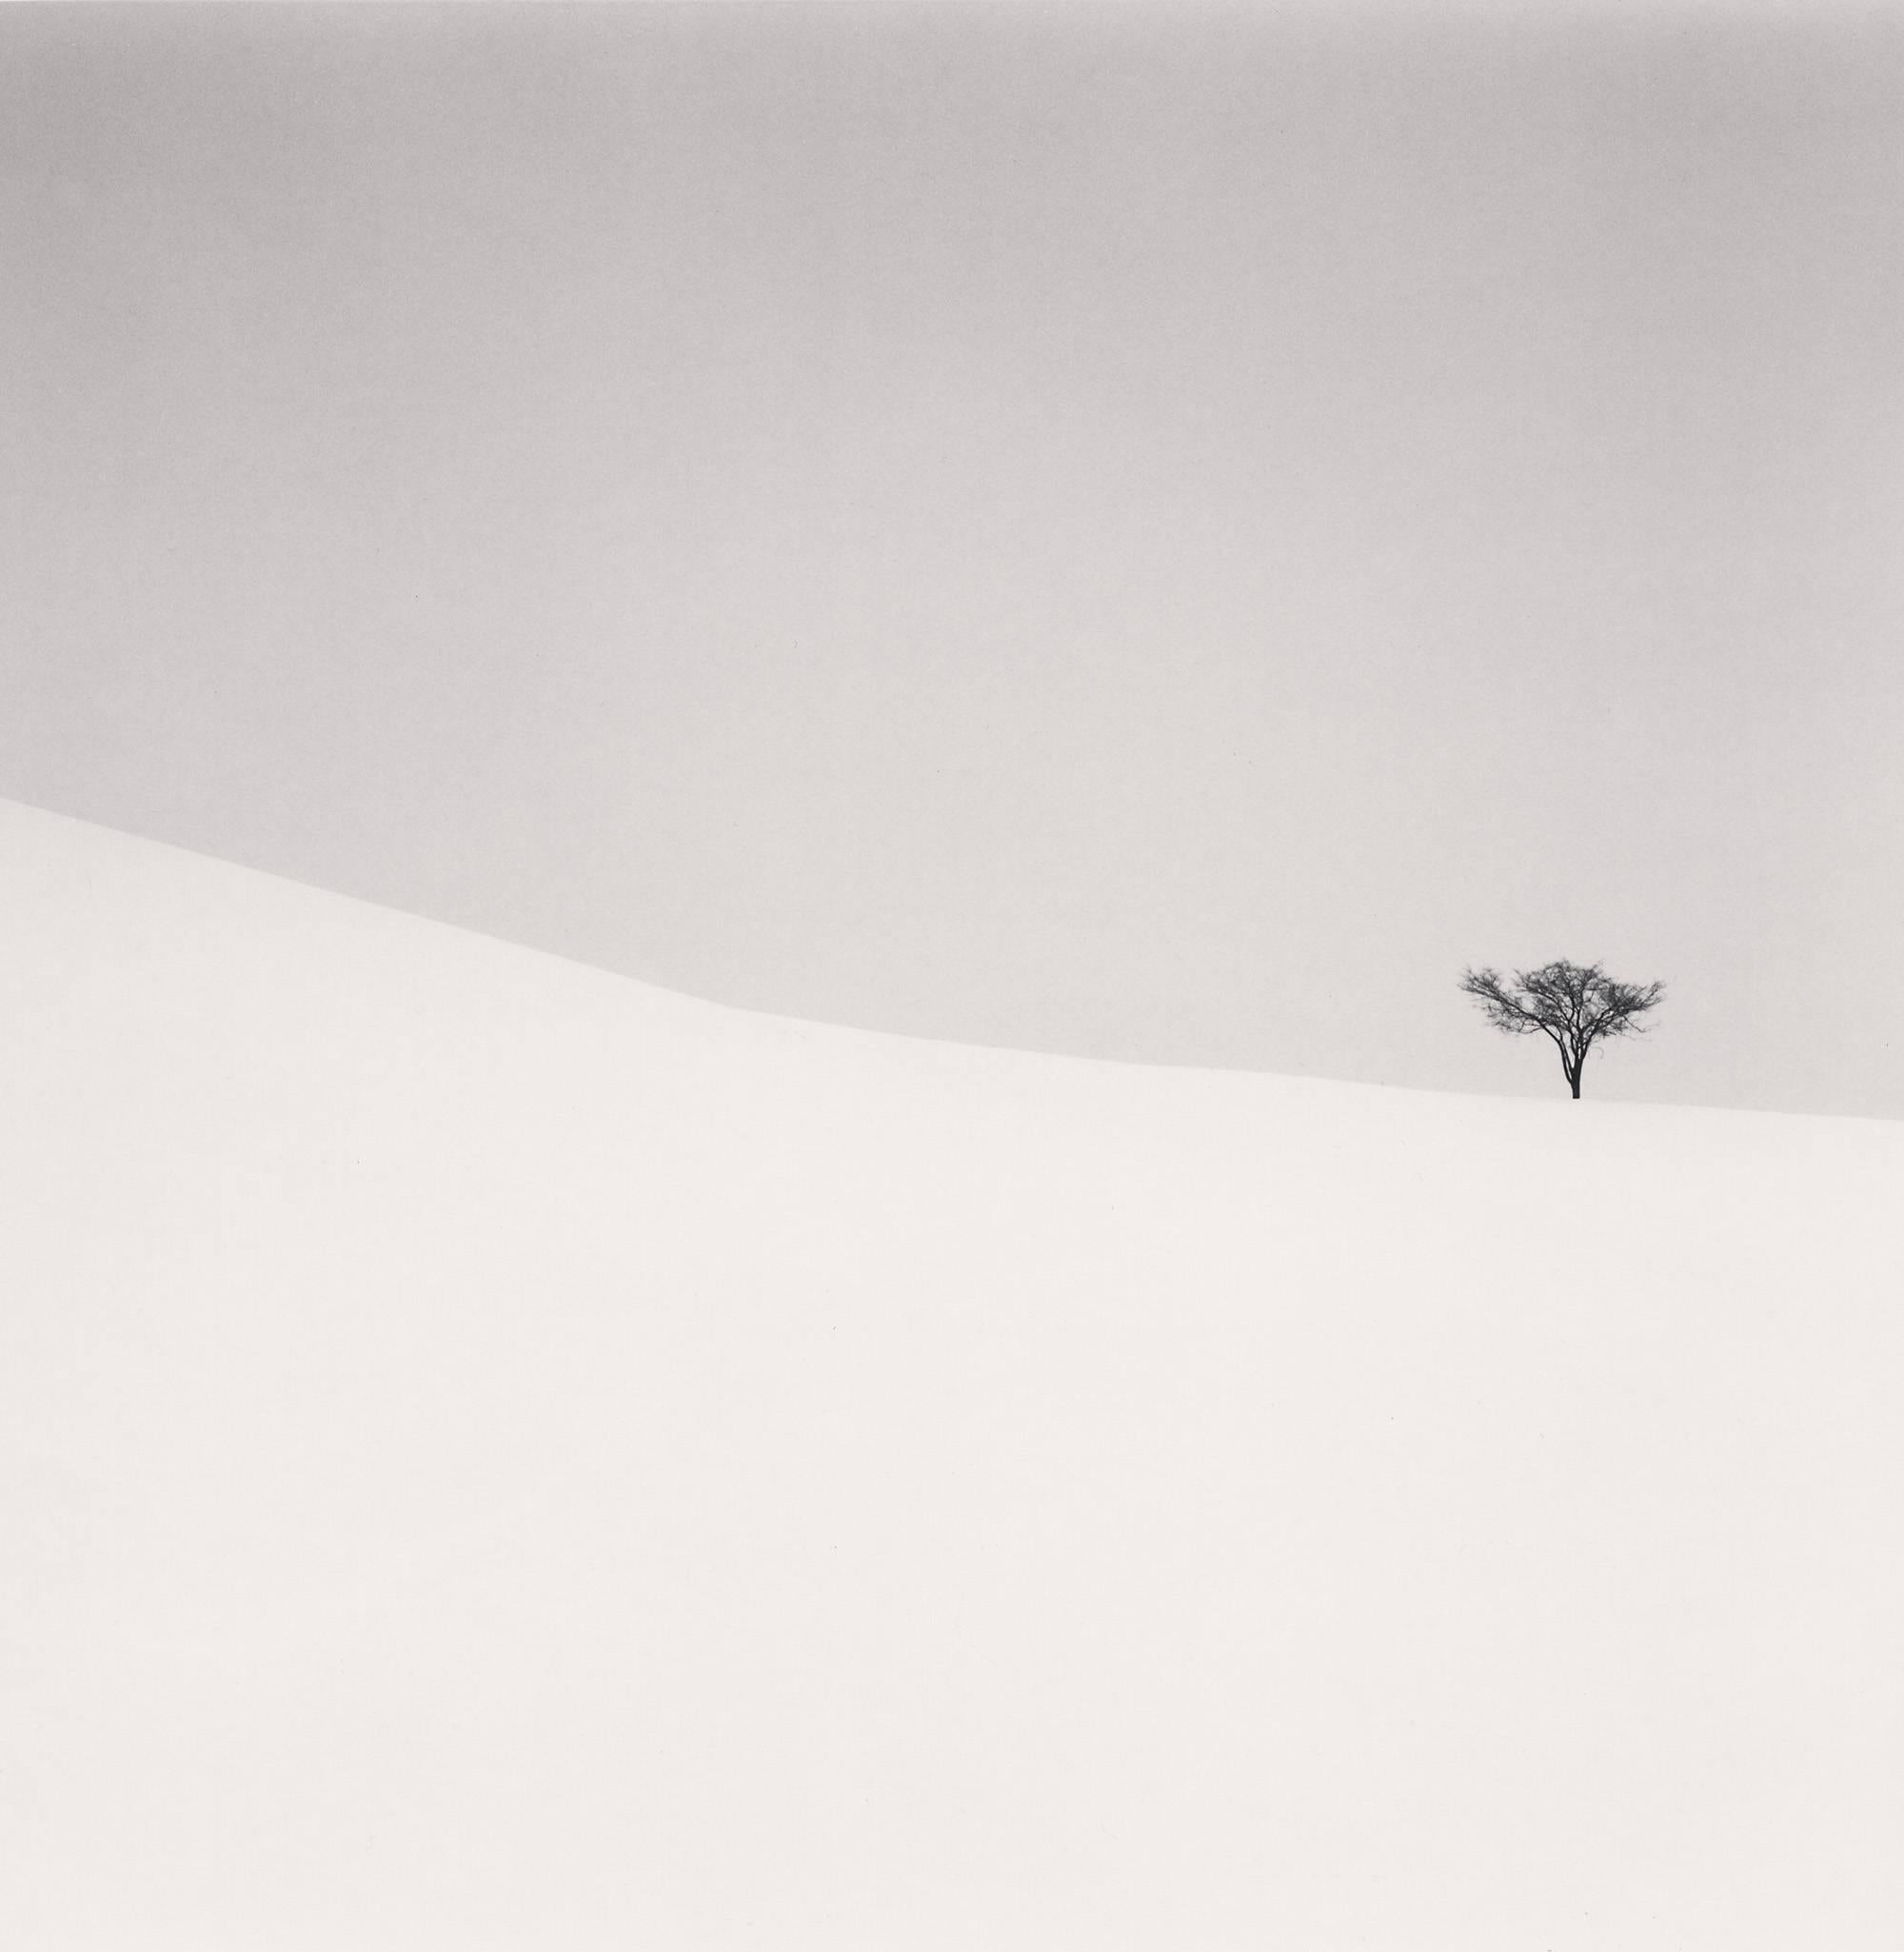 Michael Kenna Black and White Photograph - Single Tree, Mita, Hokkaido, Japan. 2007